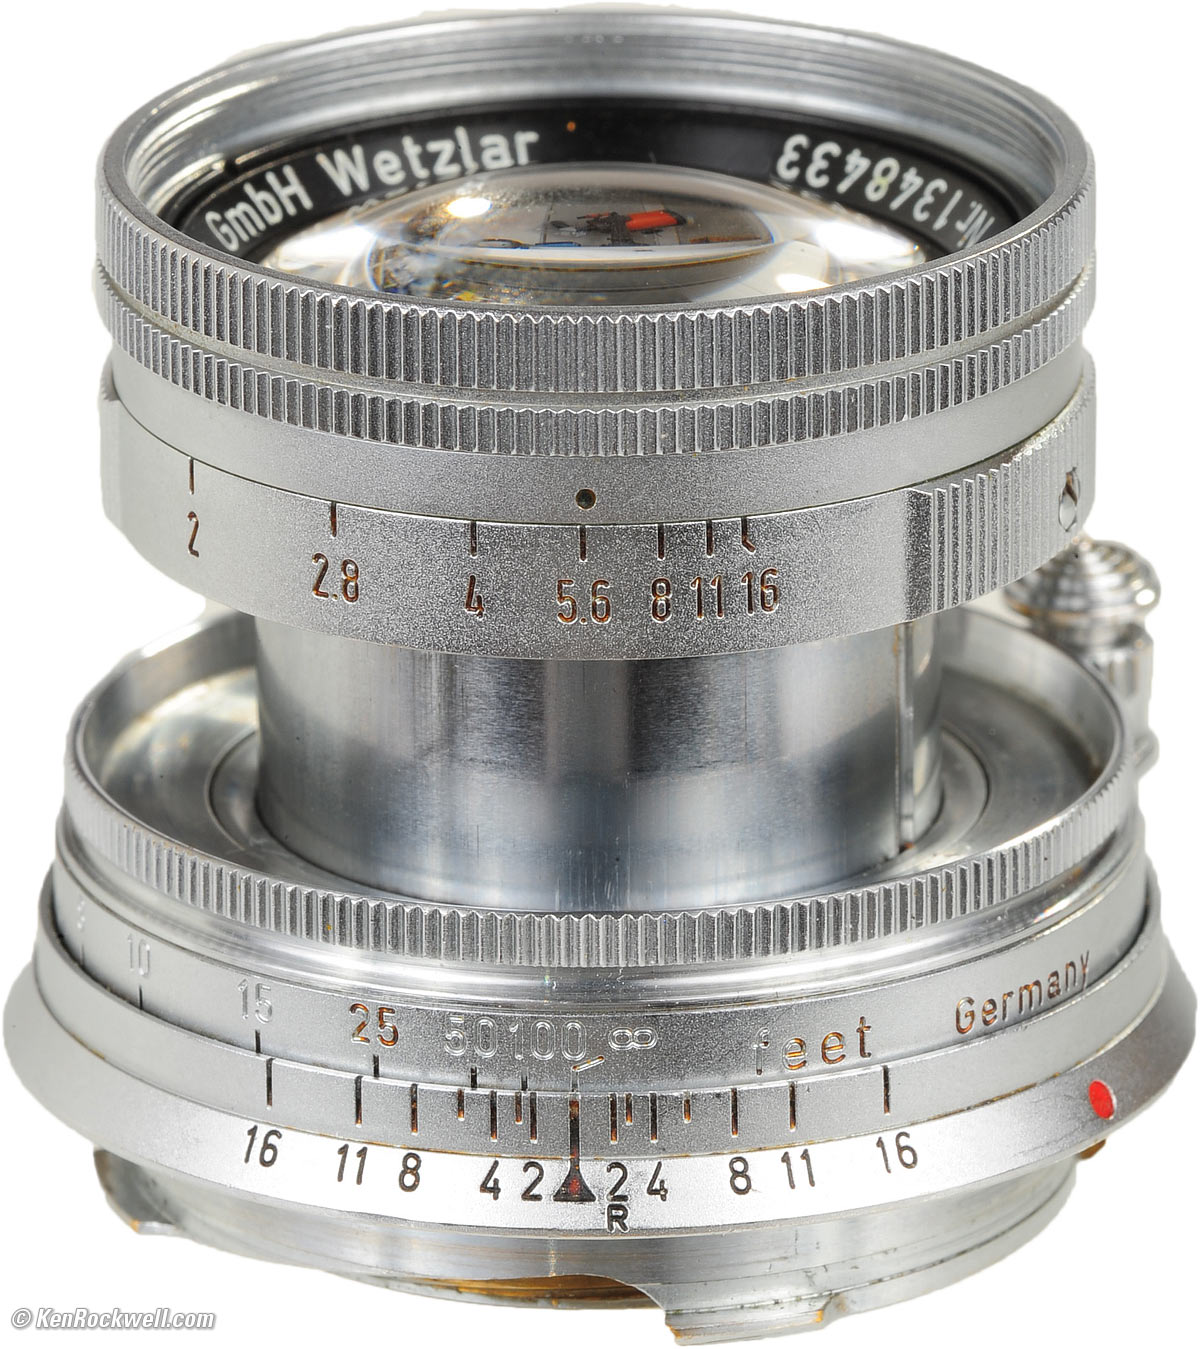 Best Two Lenses For Leica M9